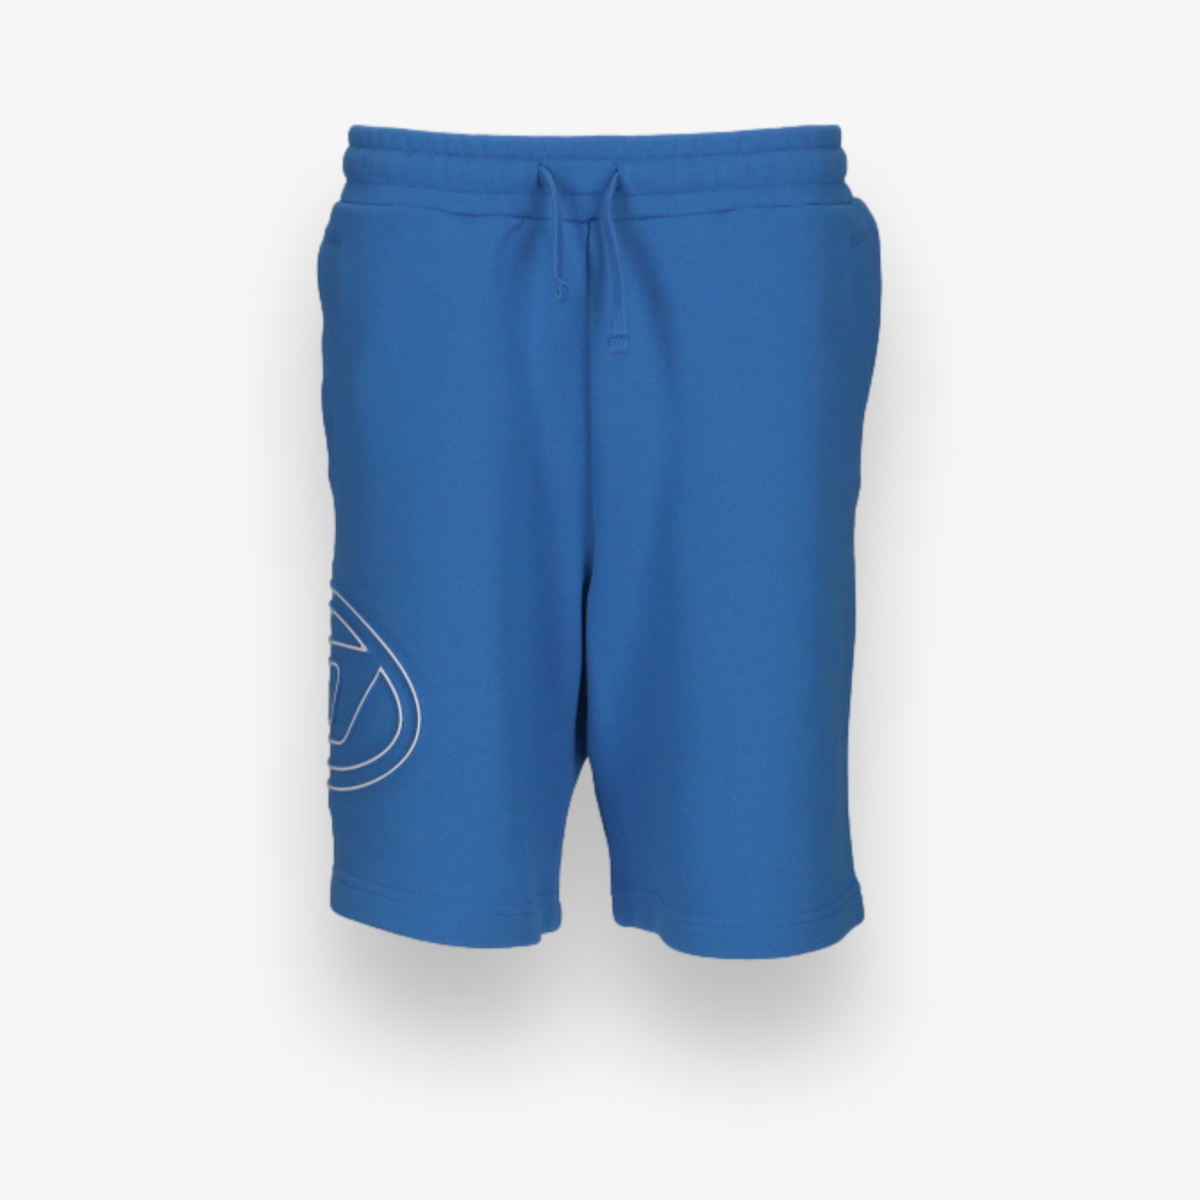 Fleece Shorts With Oval D Logo